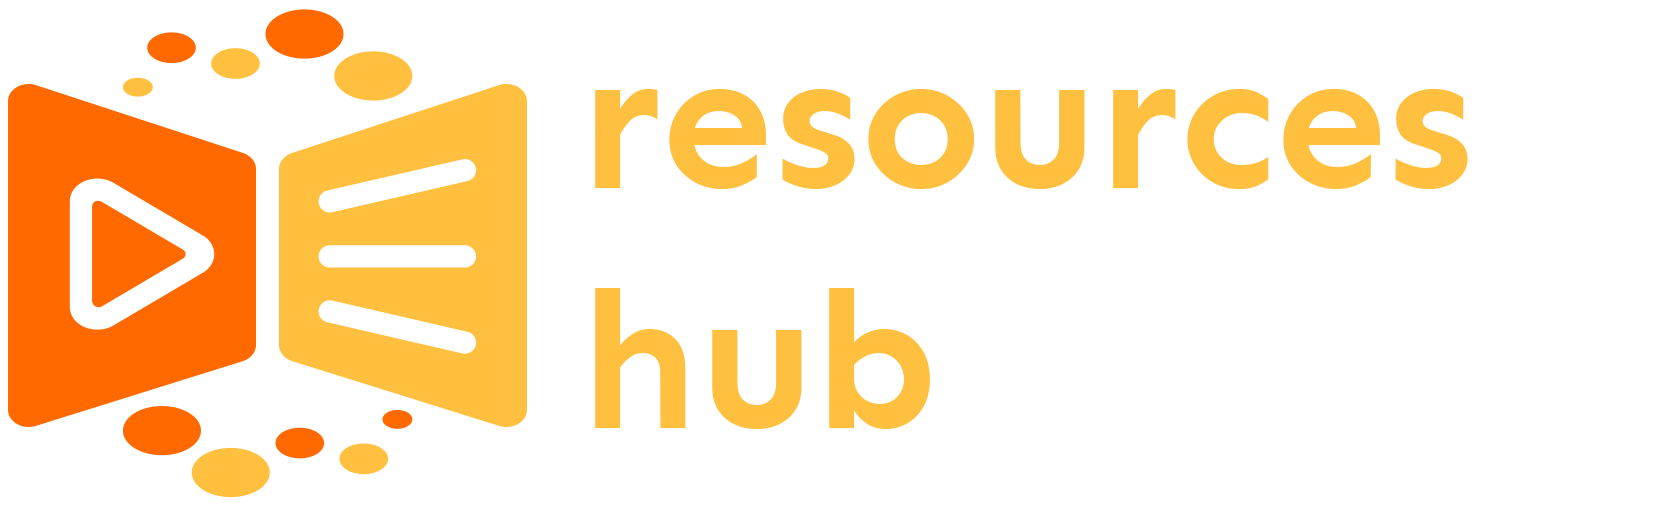 Resources Hub Logo